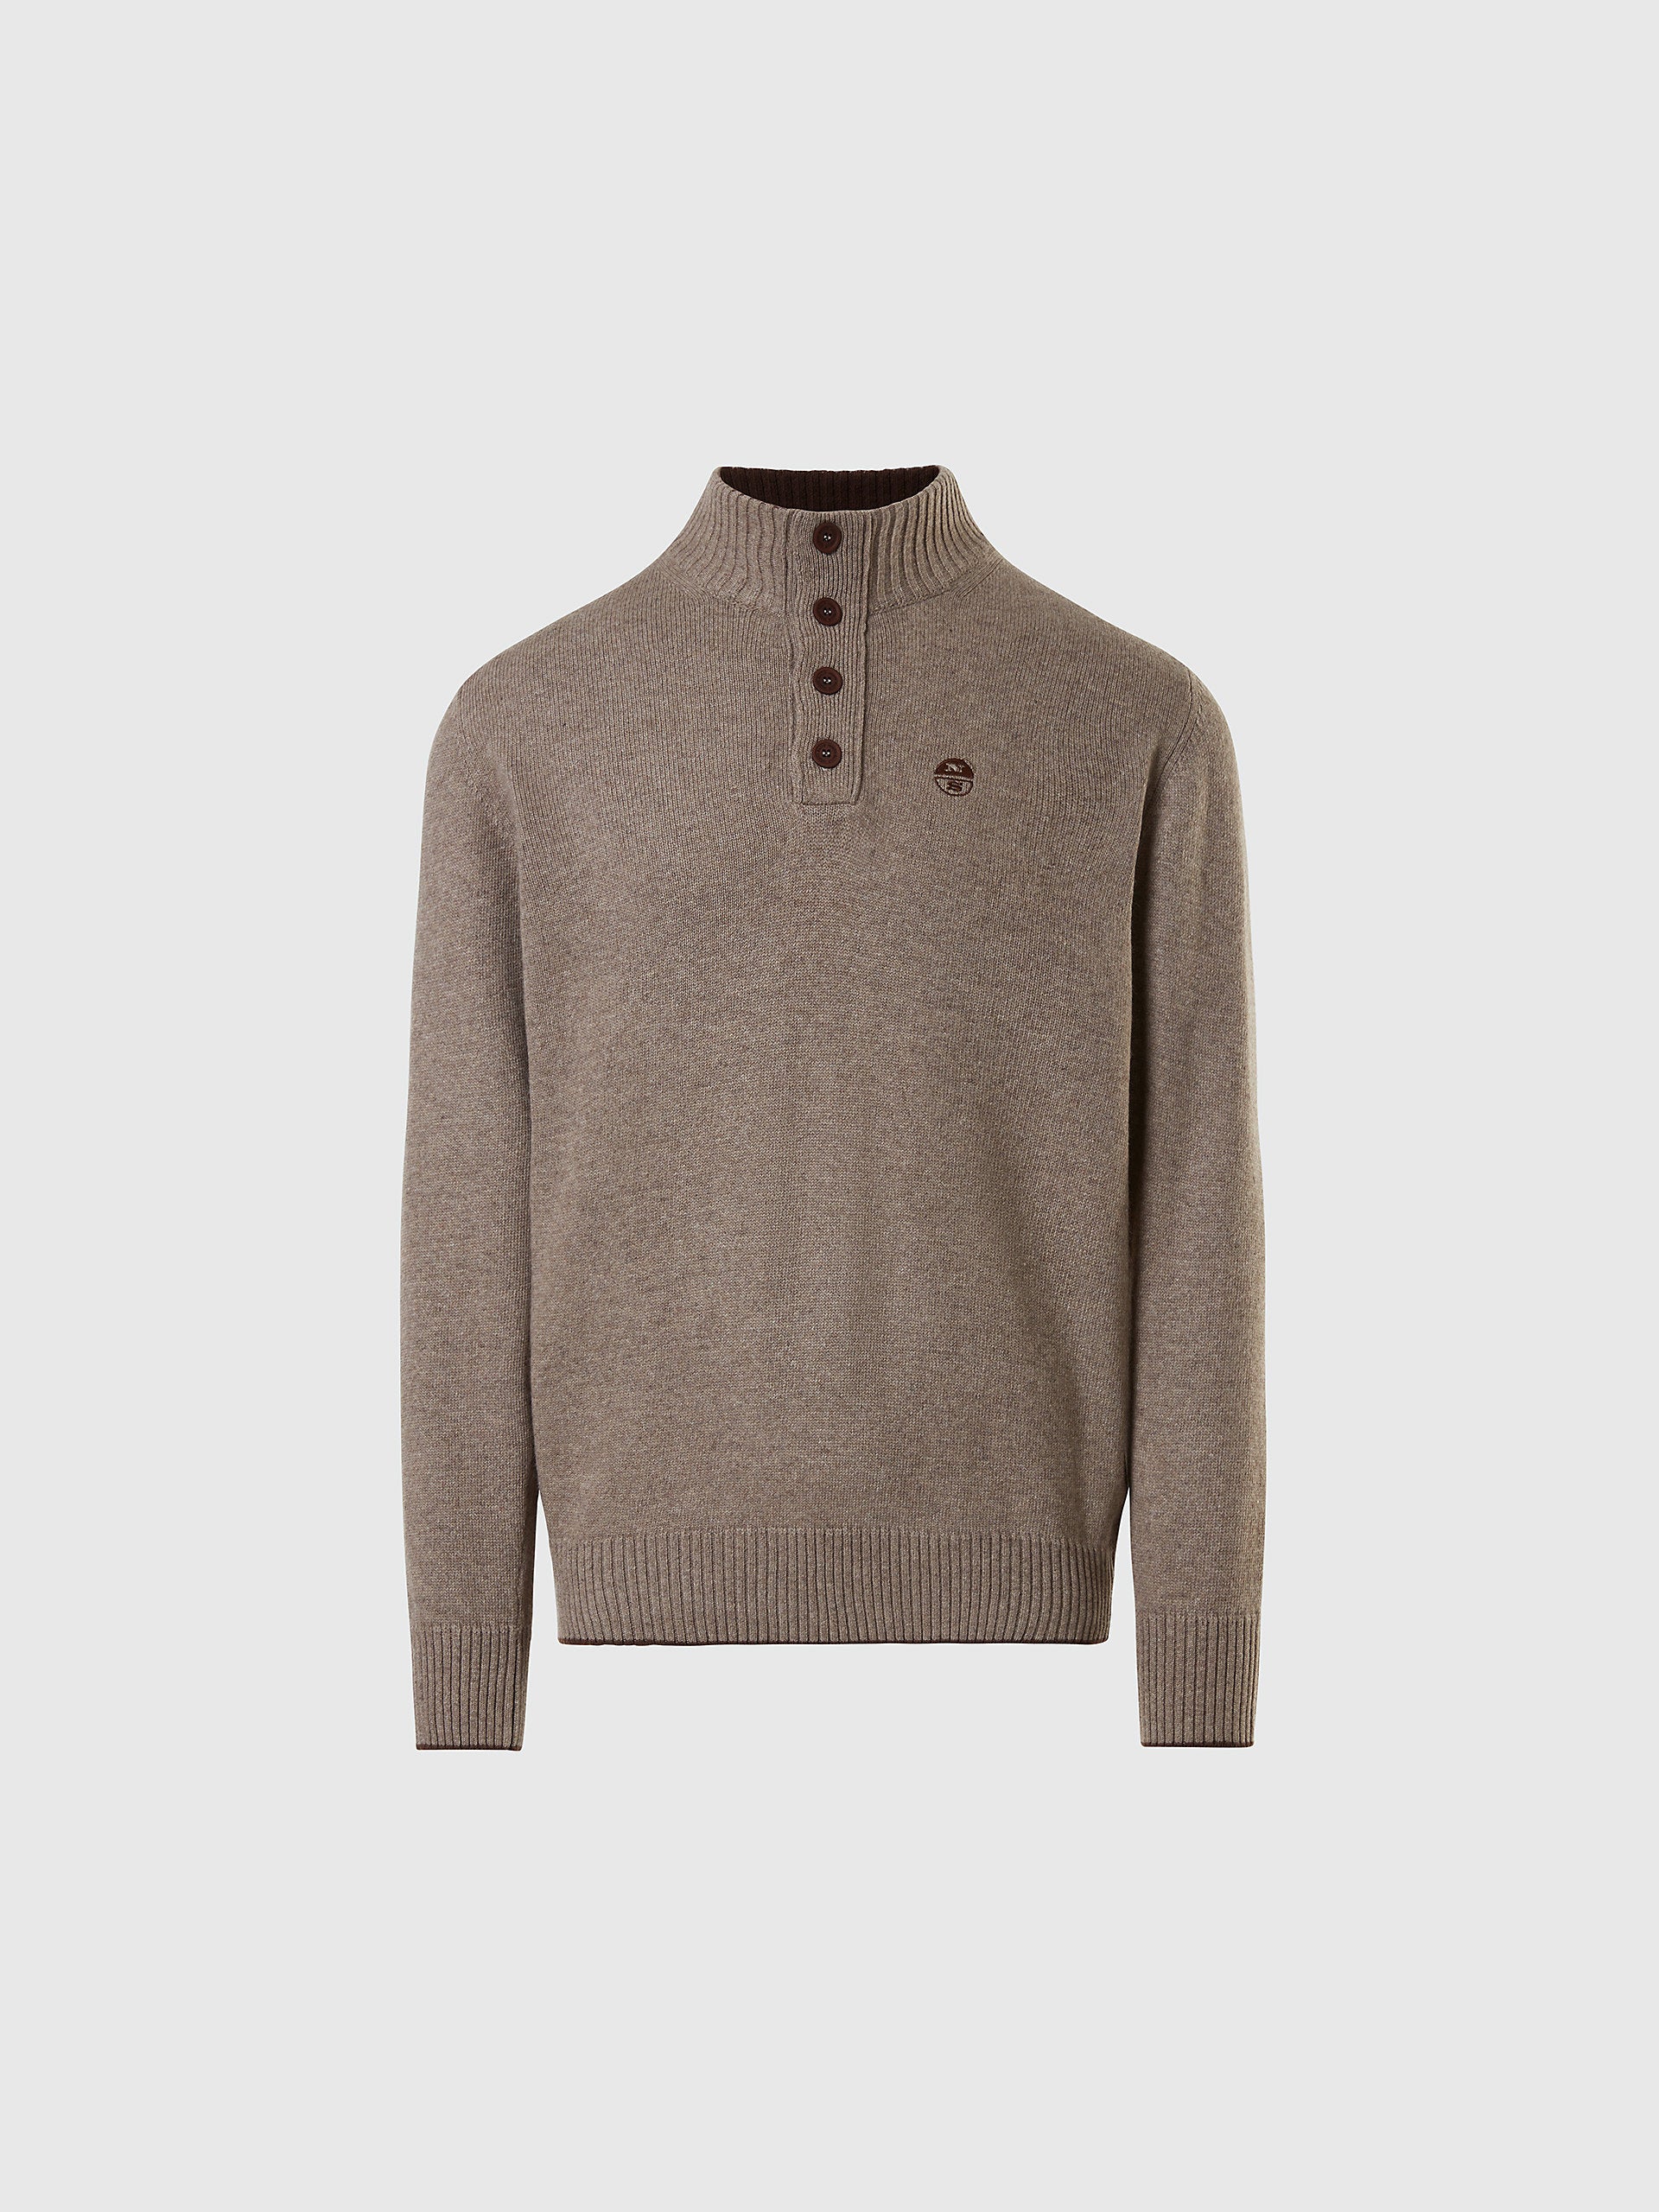 Half-button cashmere sweater | North Sails